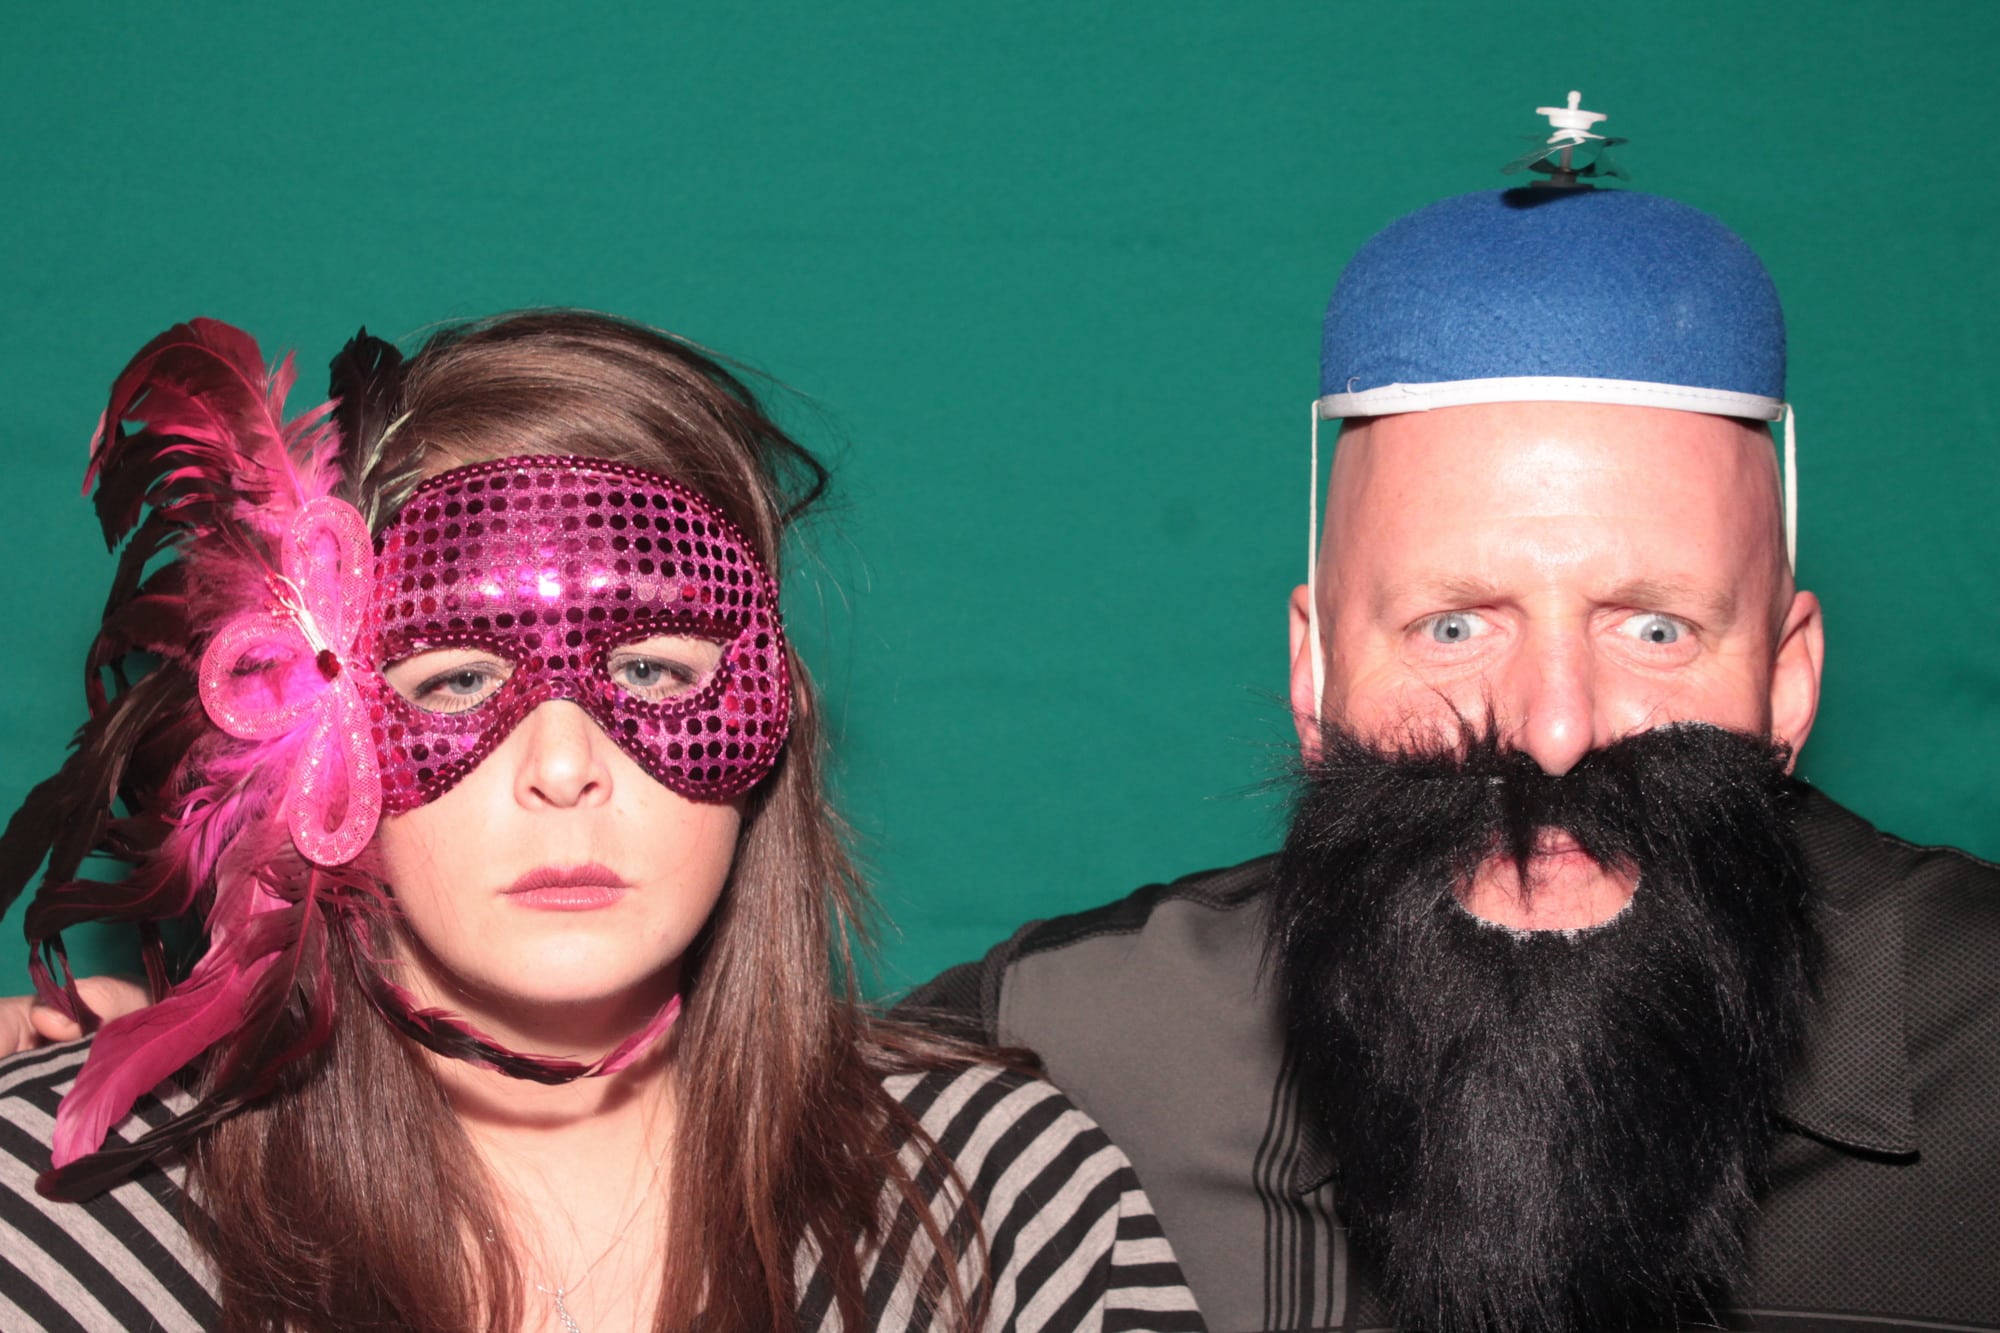 Photo Booth Rental-Wedding-Beards-Masks-Hats-Props-Teal Backdrop-Portrait-No. 1